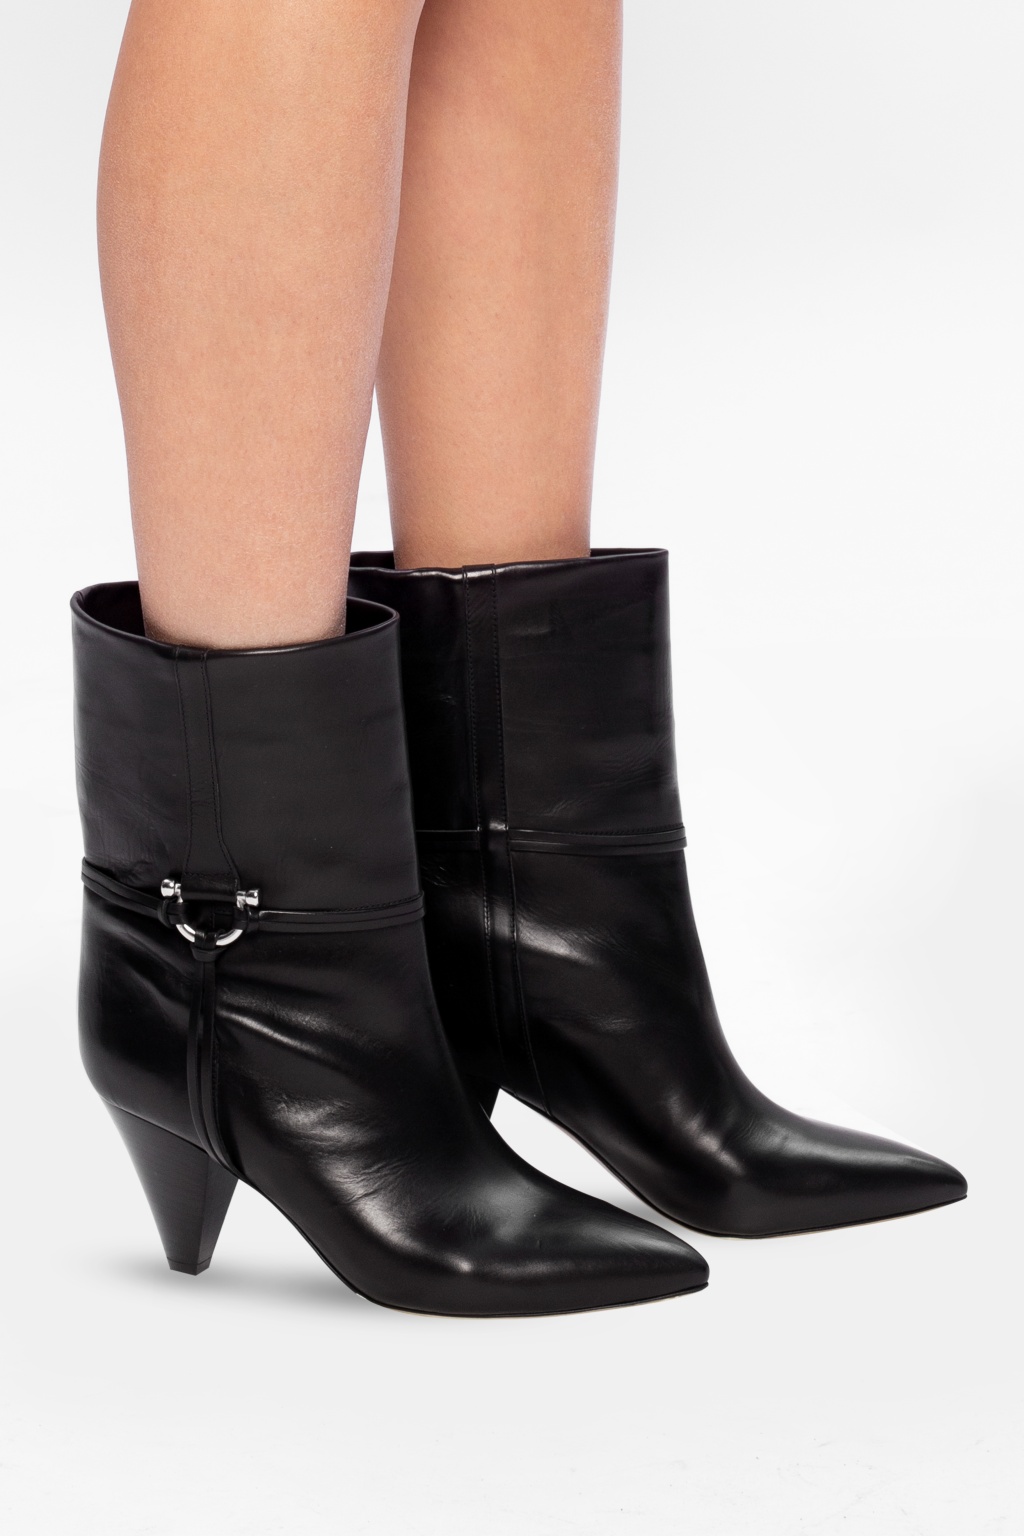 Isabel Marant ‘Lilet’ heeled ankle boots